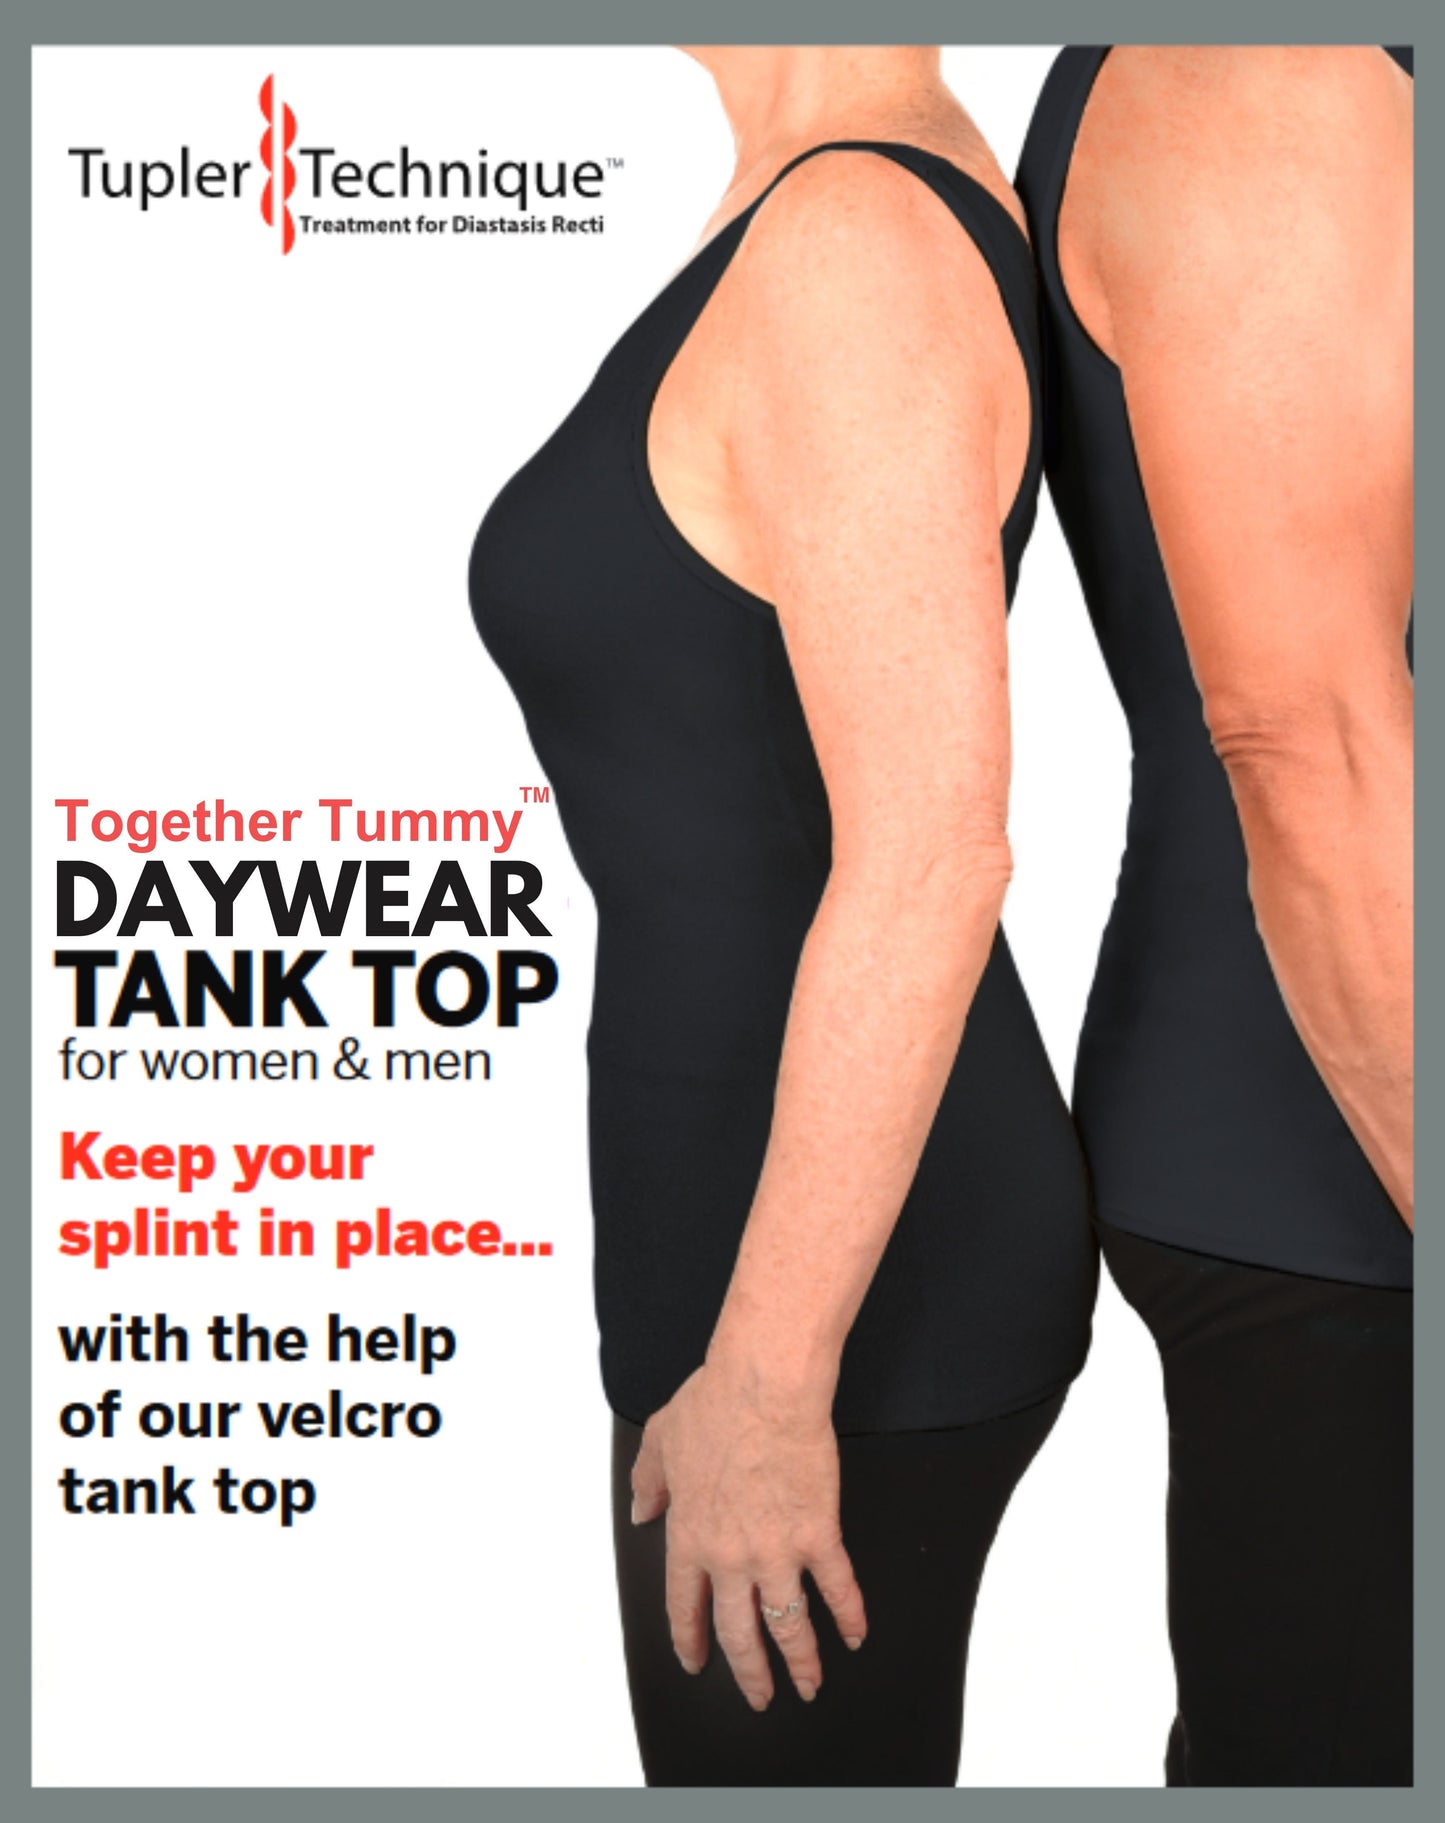 TogetherTummy™ Daywear Tank Top and Splint